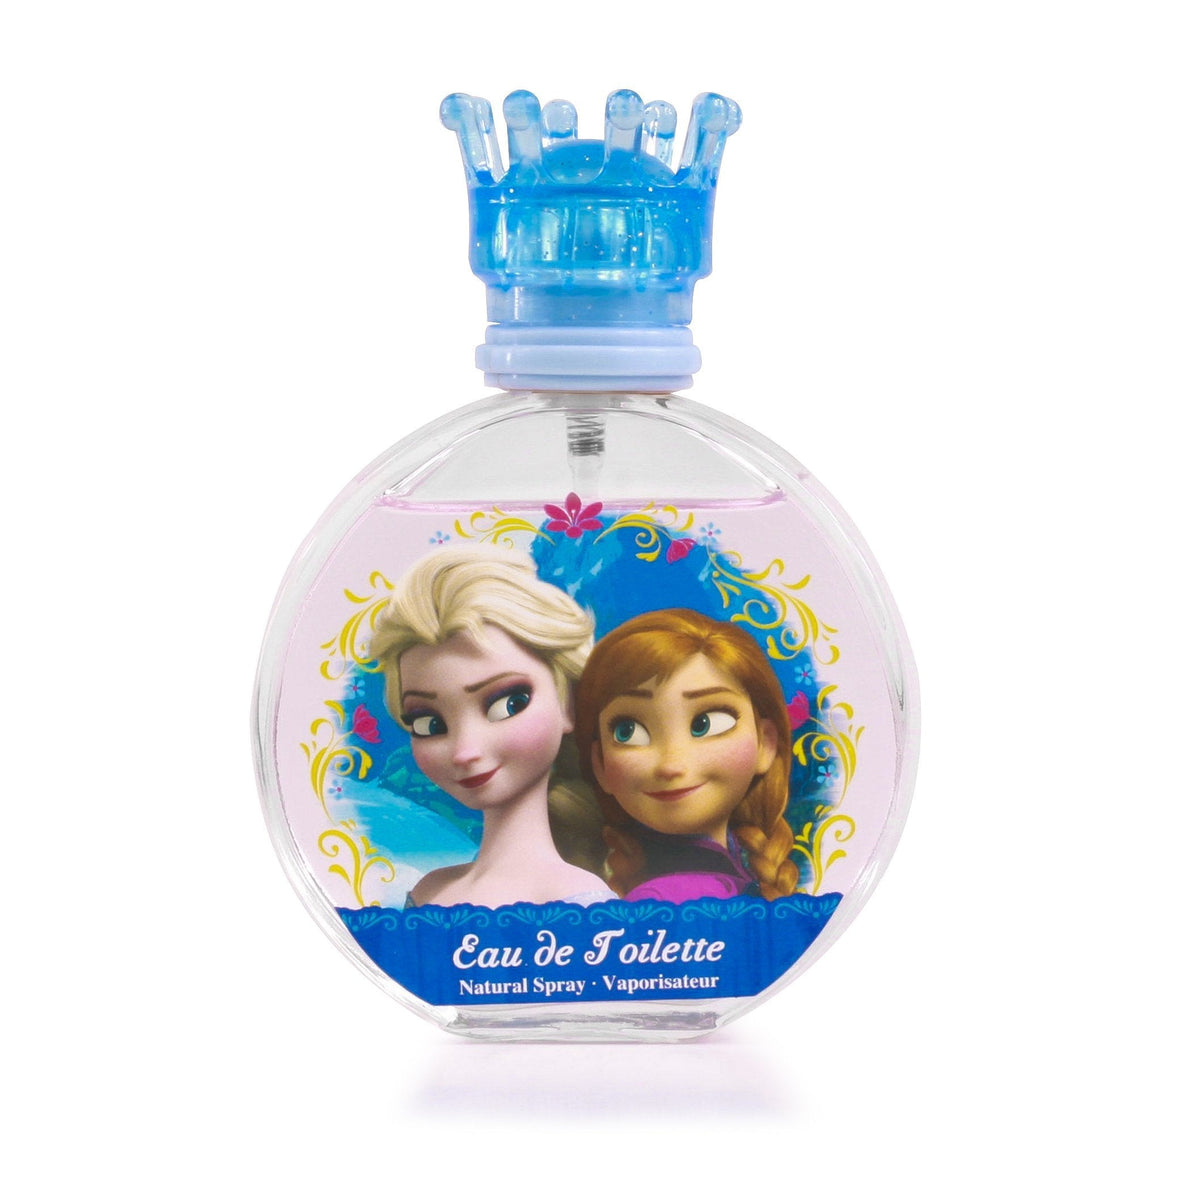 Frozen Gift Set for Girls by Disney 3.4 oz.